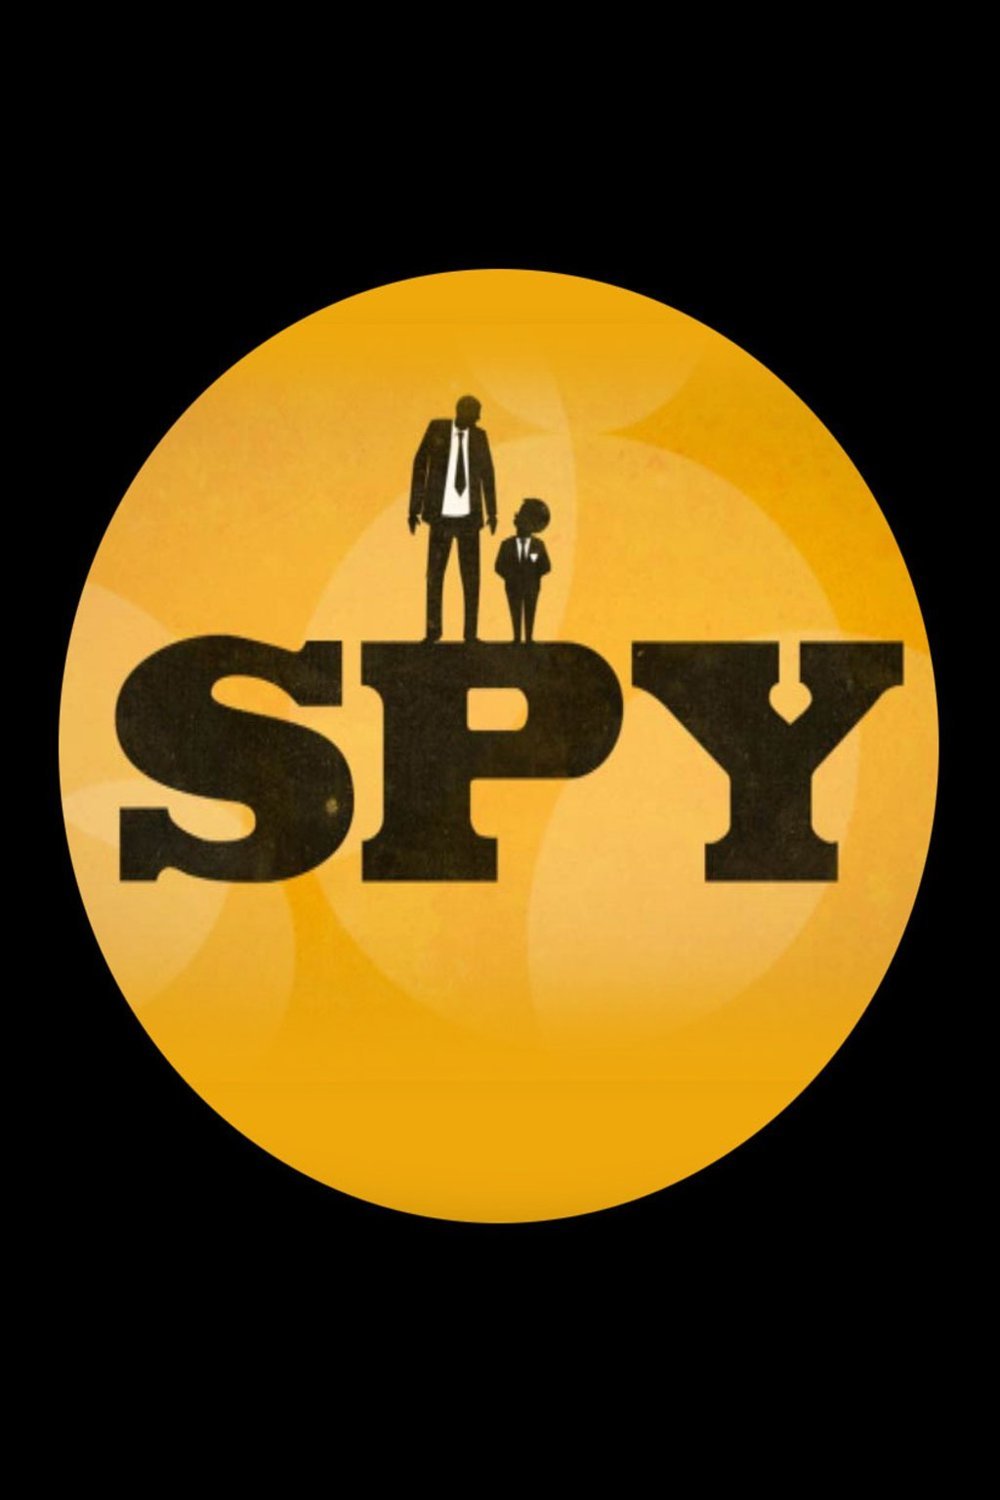 L'affiche du film Spy